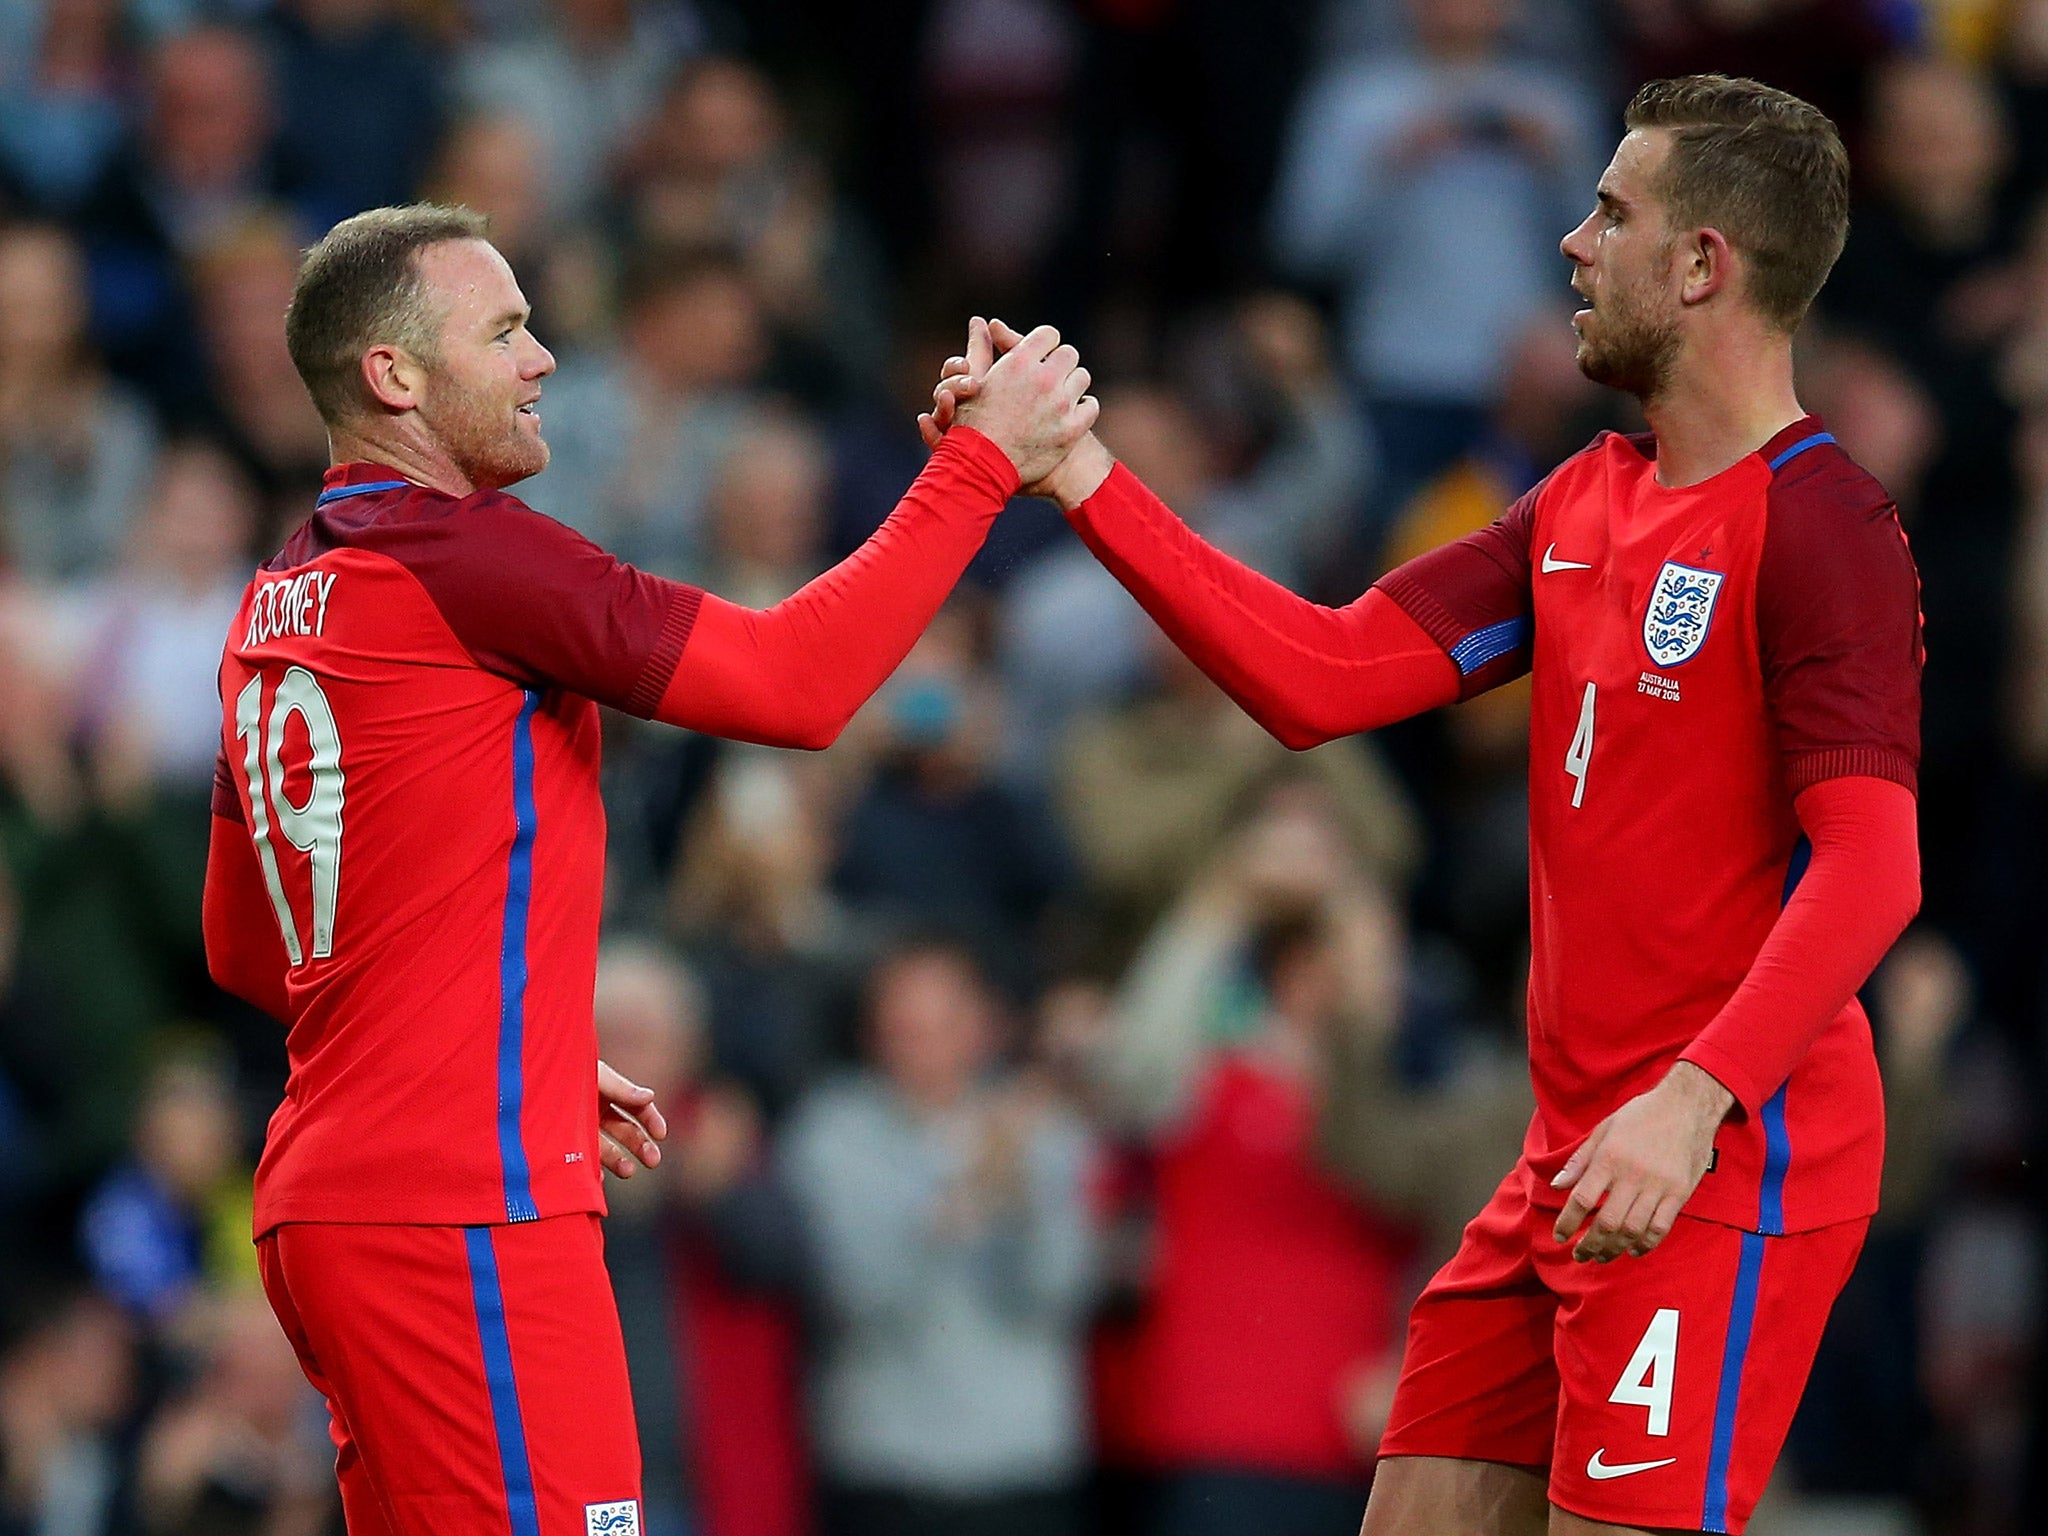 Wayne Rooney celebrates with Jordan Henderson after England's win over Australia